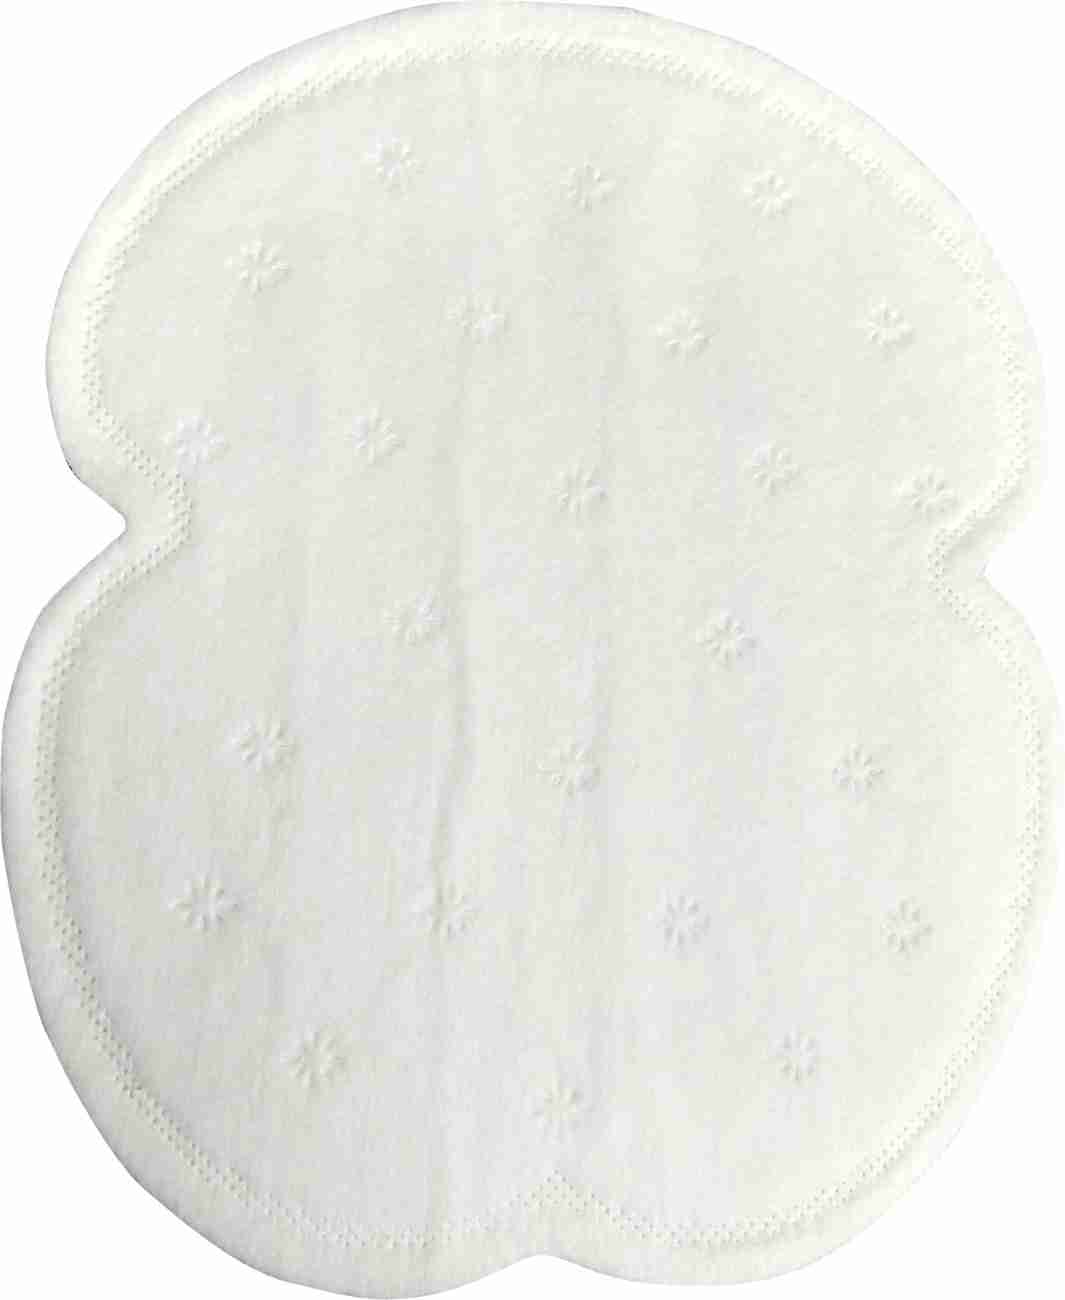 feelhigh Sweat pads Disposable Underarm pads Armpit Sweat Pads